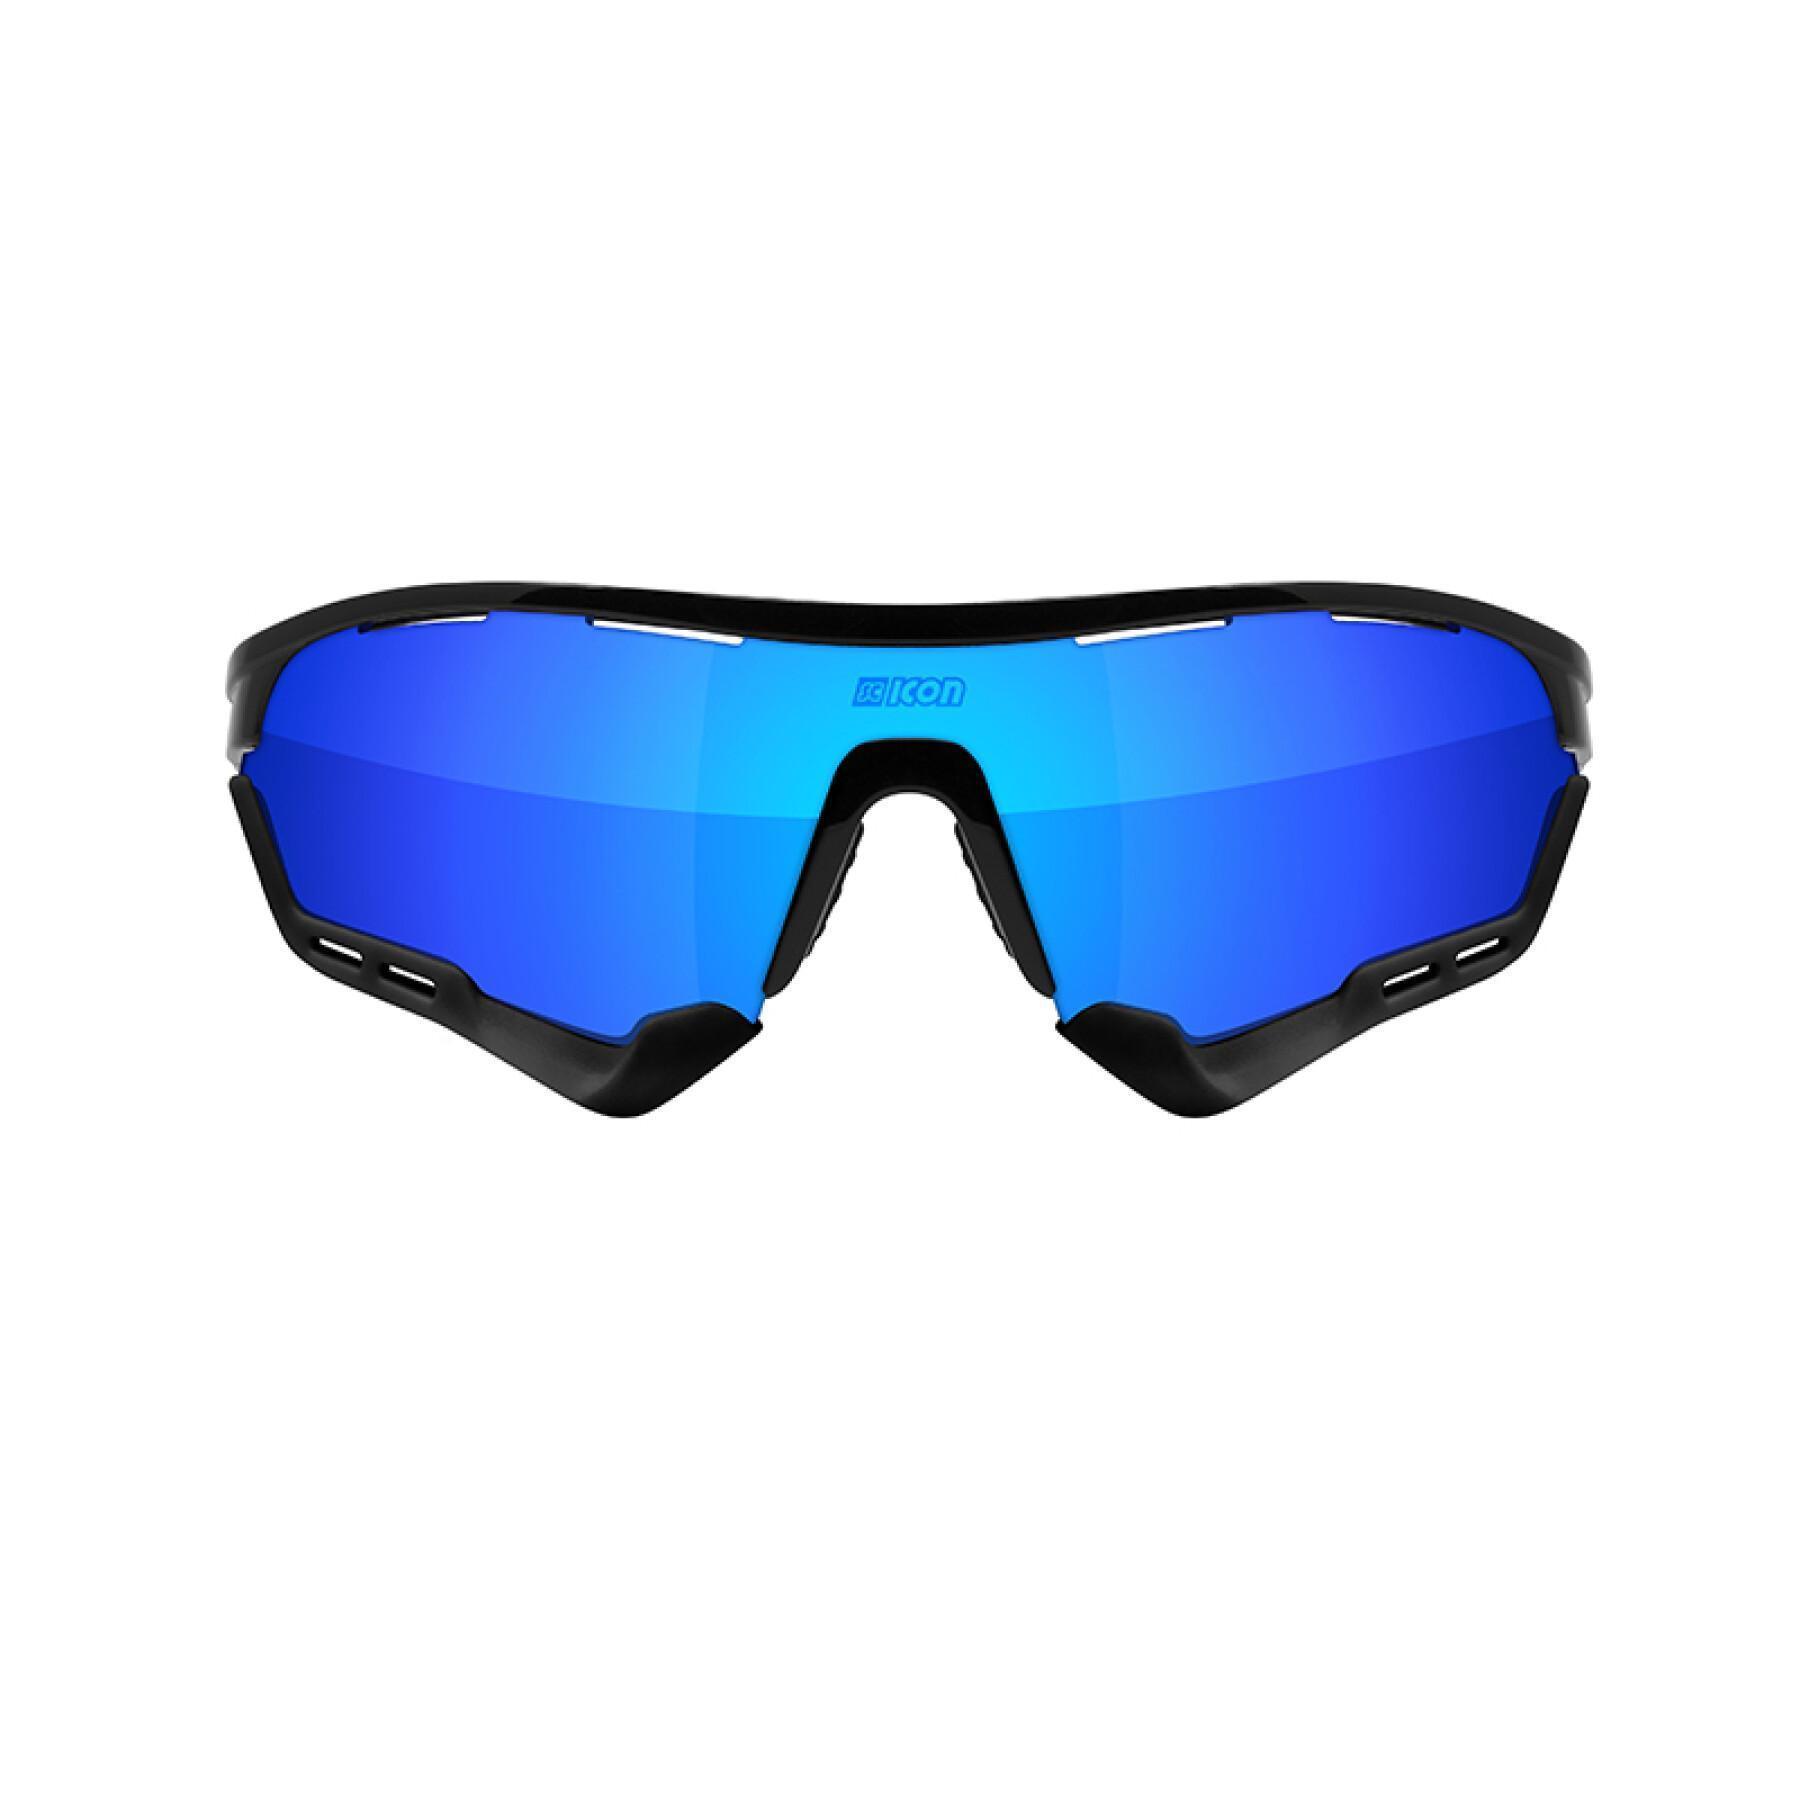 Okulary Scicon aerotech scnpp verre multi-reflet bleues